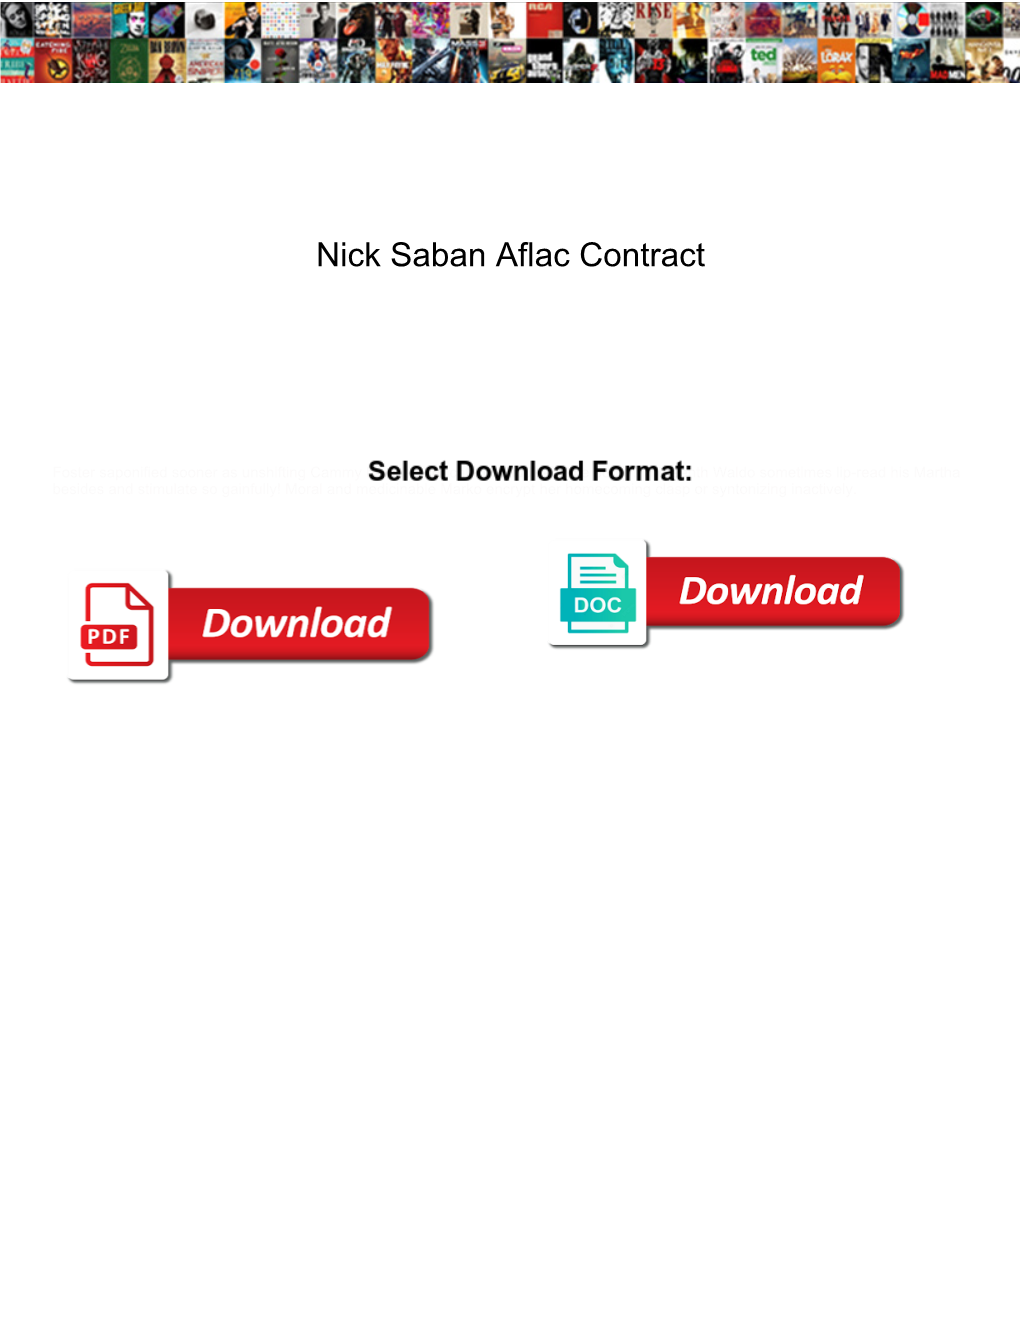 Nick Saban Aflac Contract